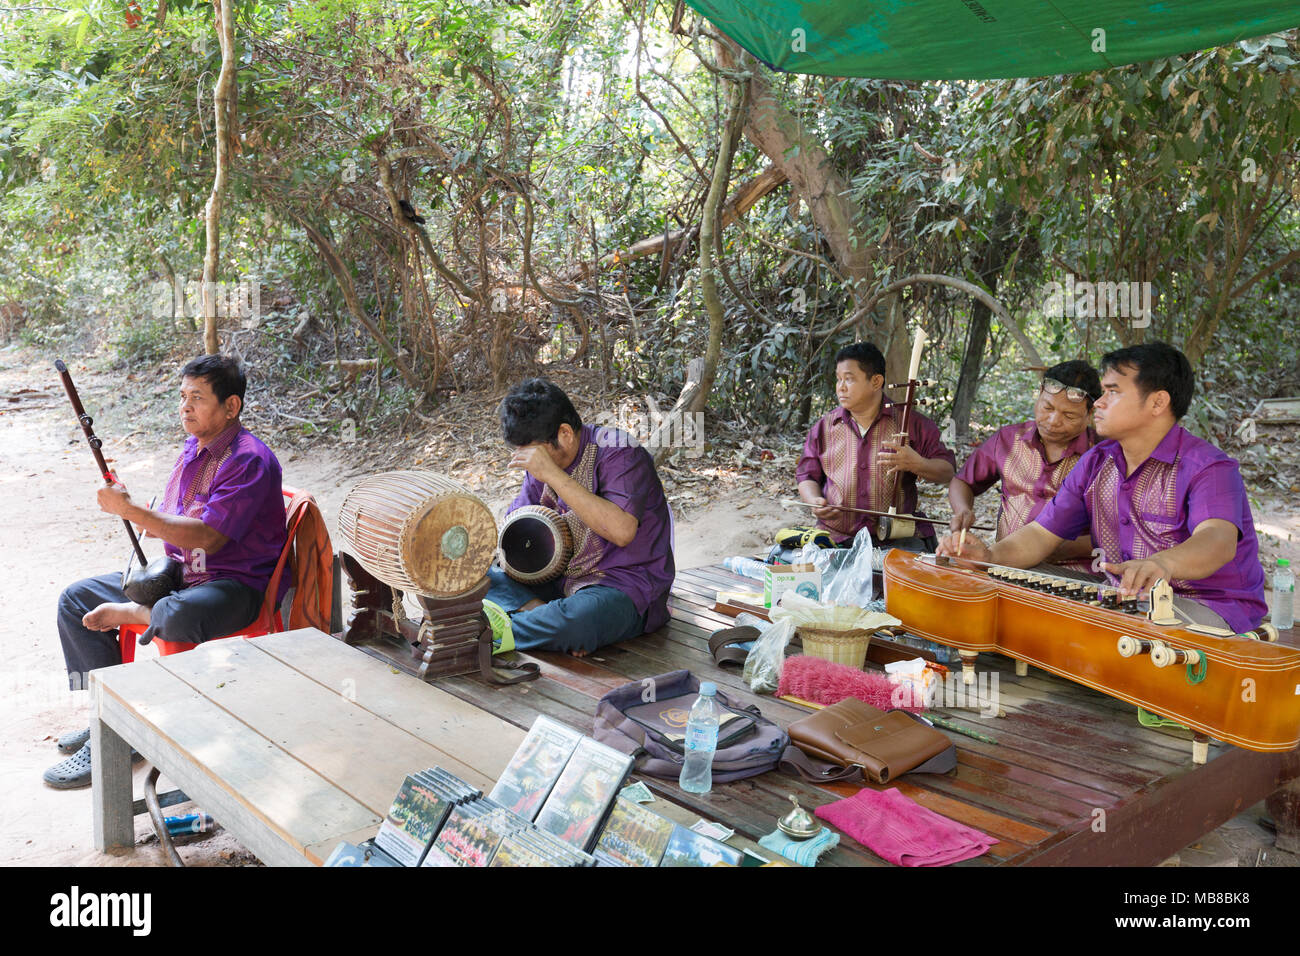 Cambodia culture - Khmer band playing traditional Khmer music, Angkor site, Angkor, Cambodia Asia Stock Photo